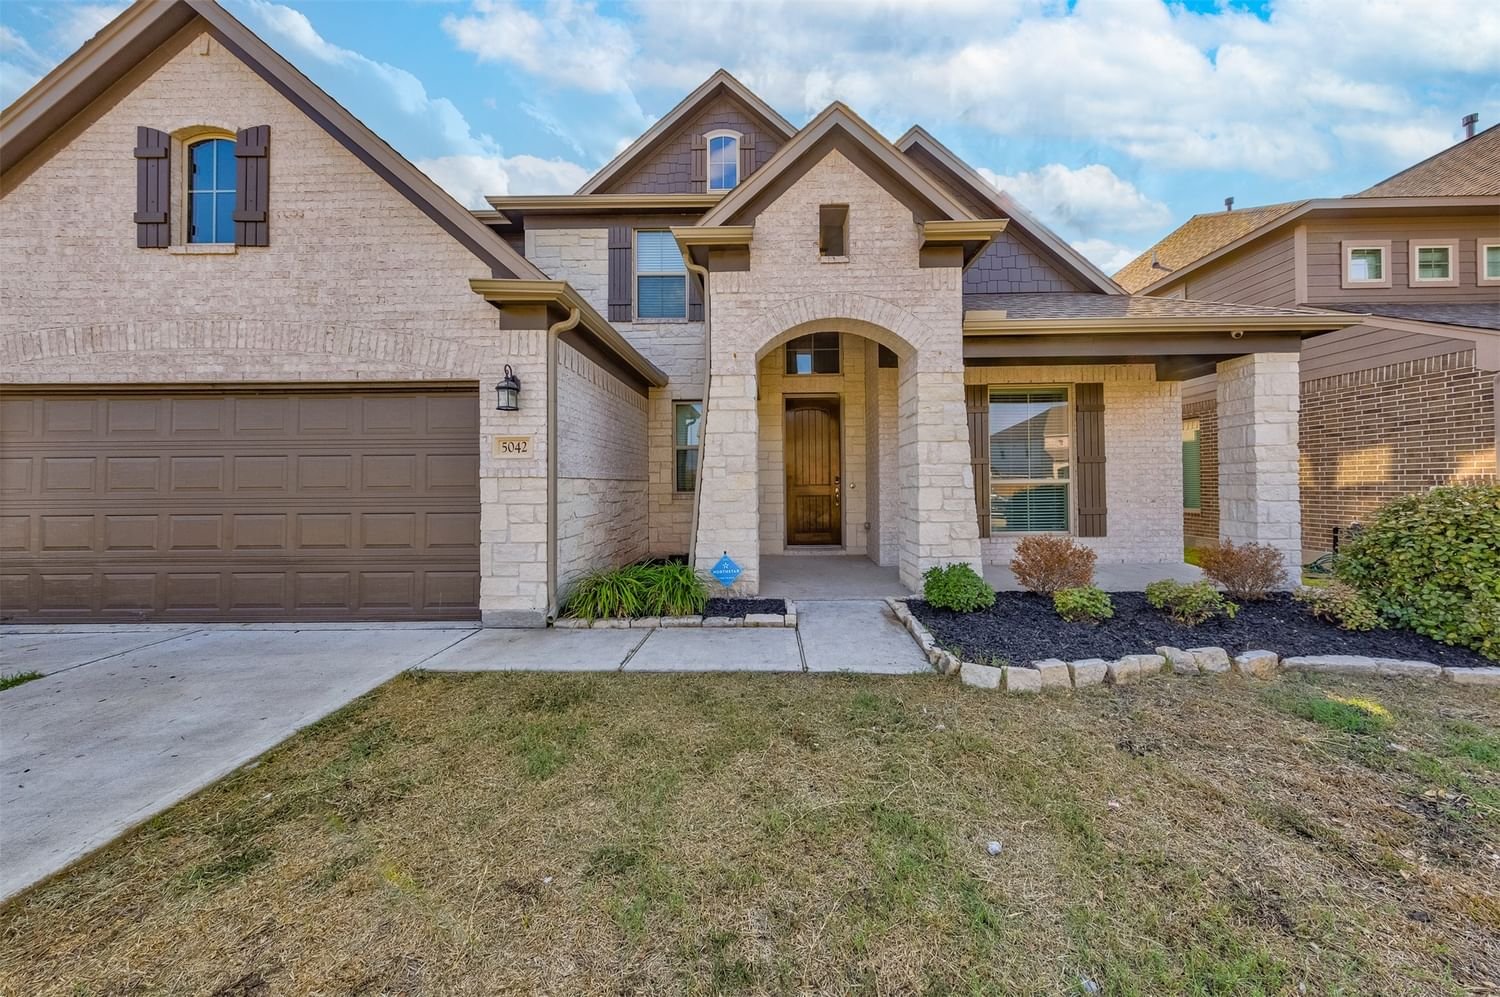 Real estate property located at 5042 Lacebark Pine, Fort Bend, Rosenberg, TX, US